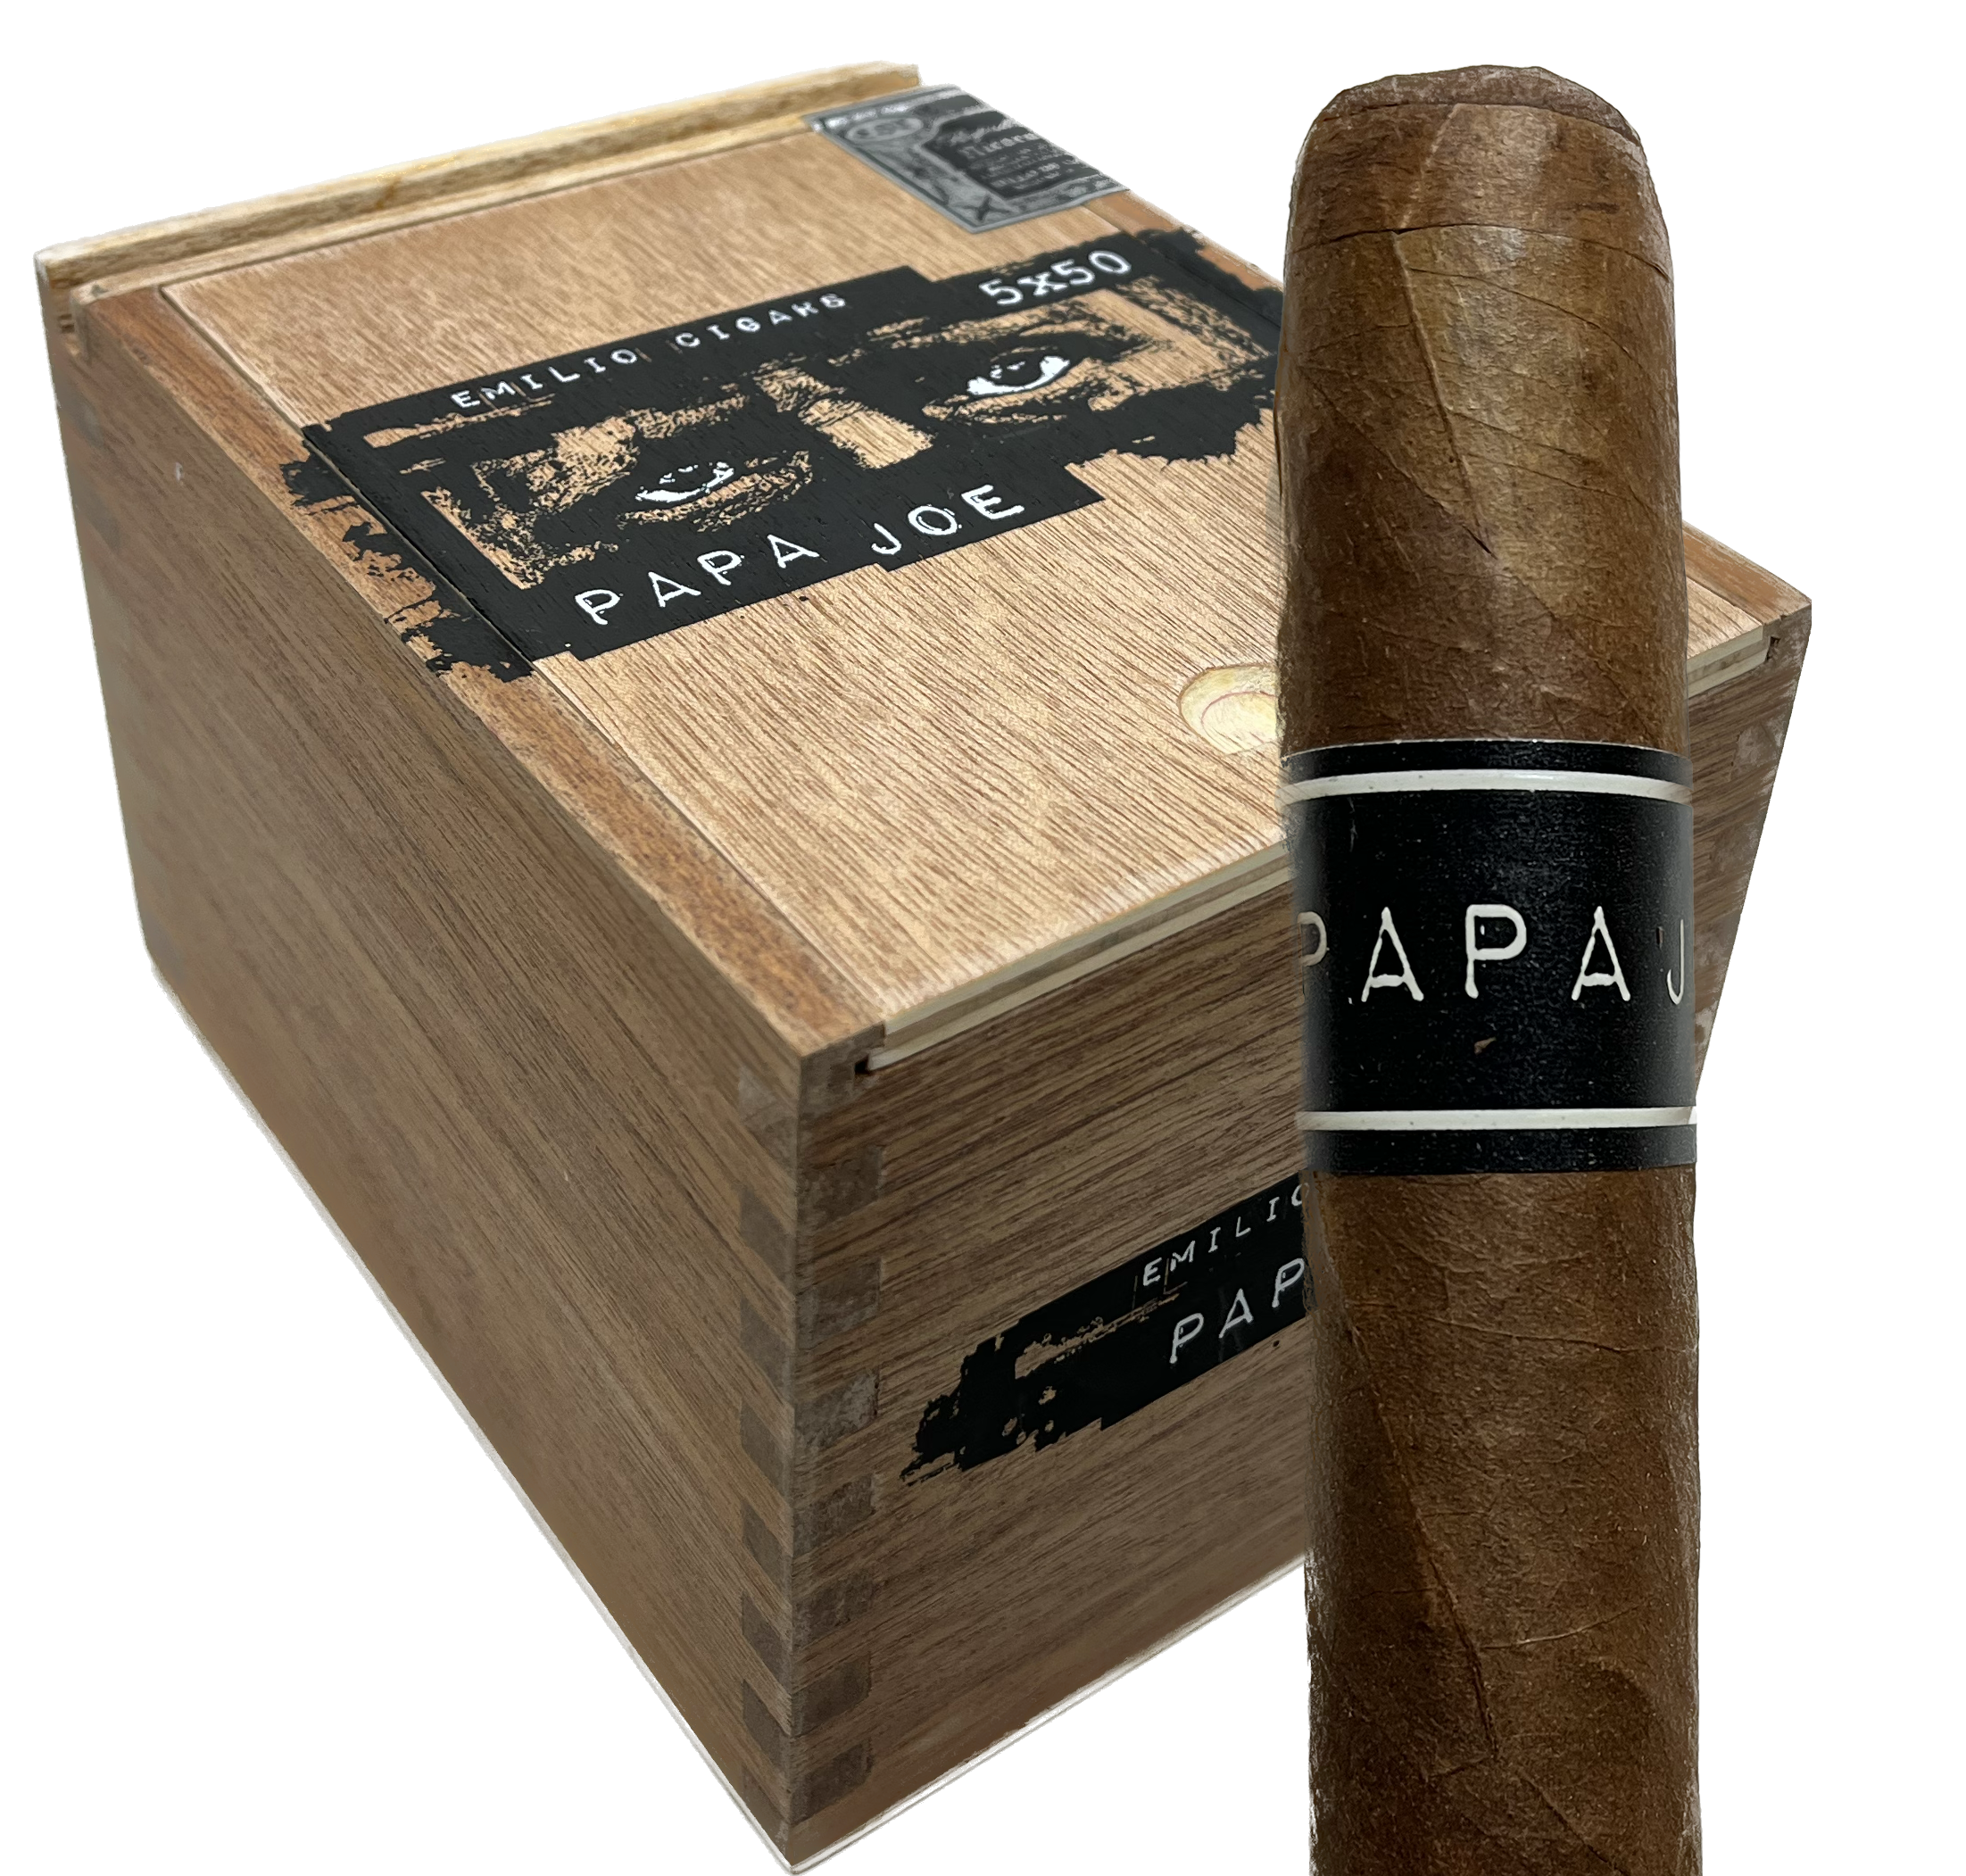 Emilio Papa Joe Cigar